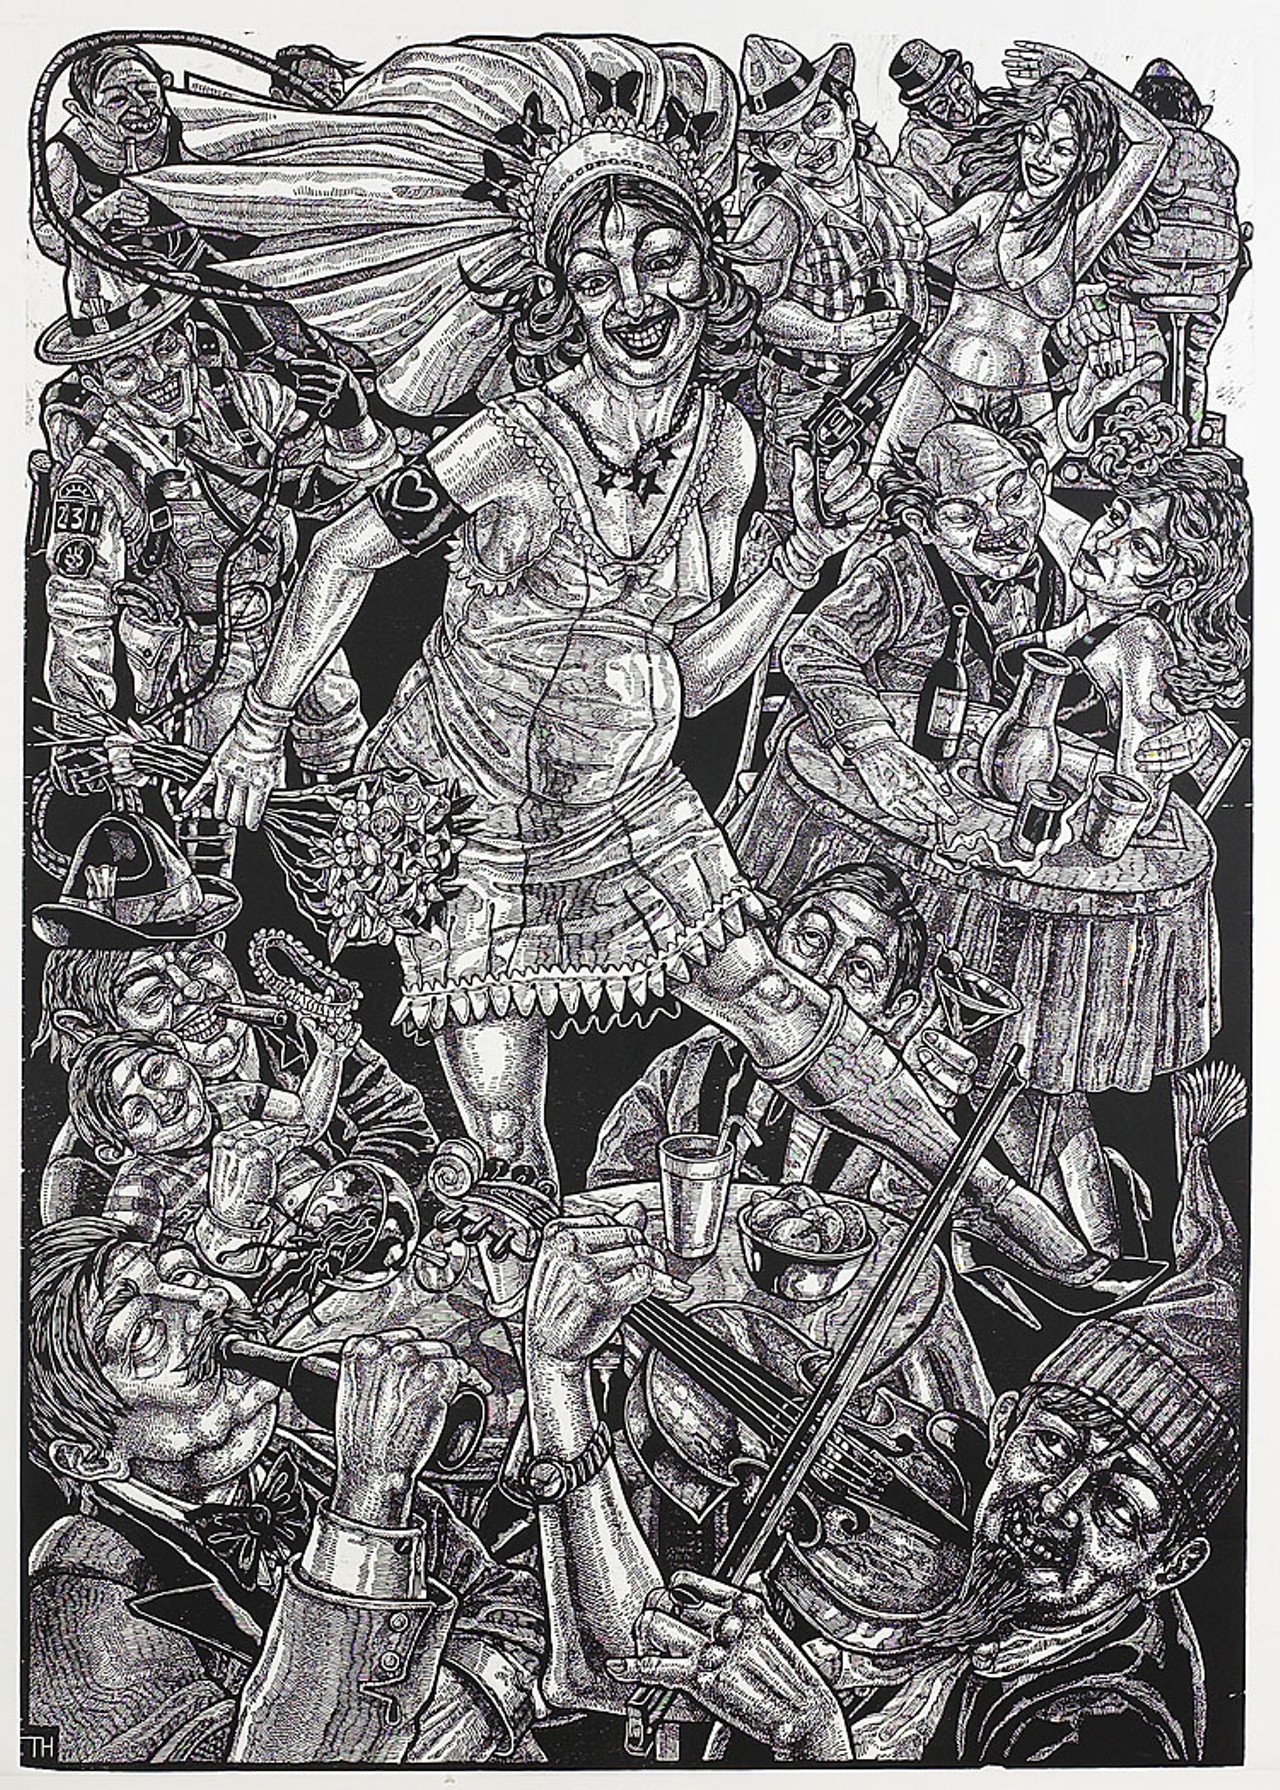 Tom Huck "Dollar Dance" (woodcut, 38" x 52", 2000)